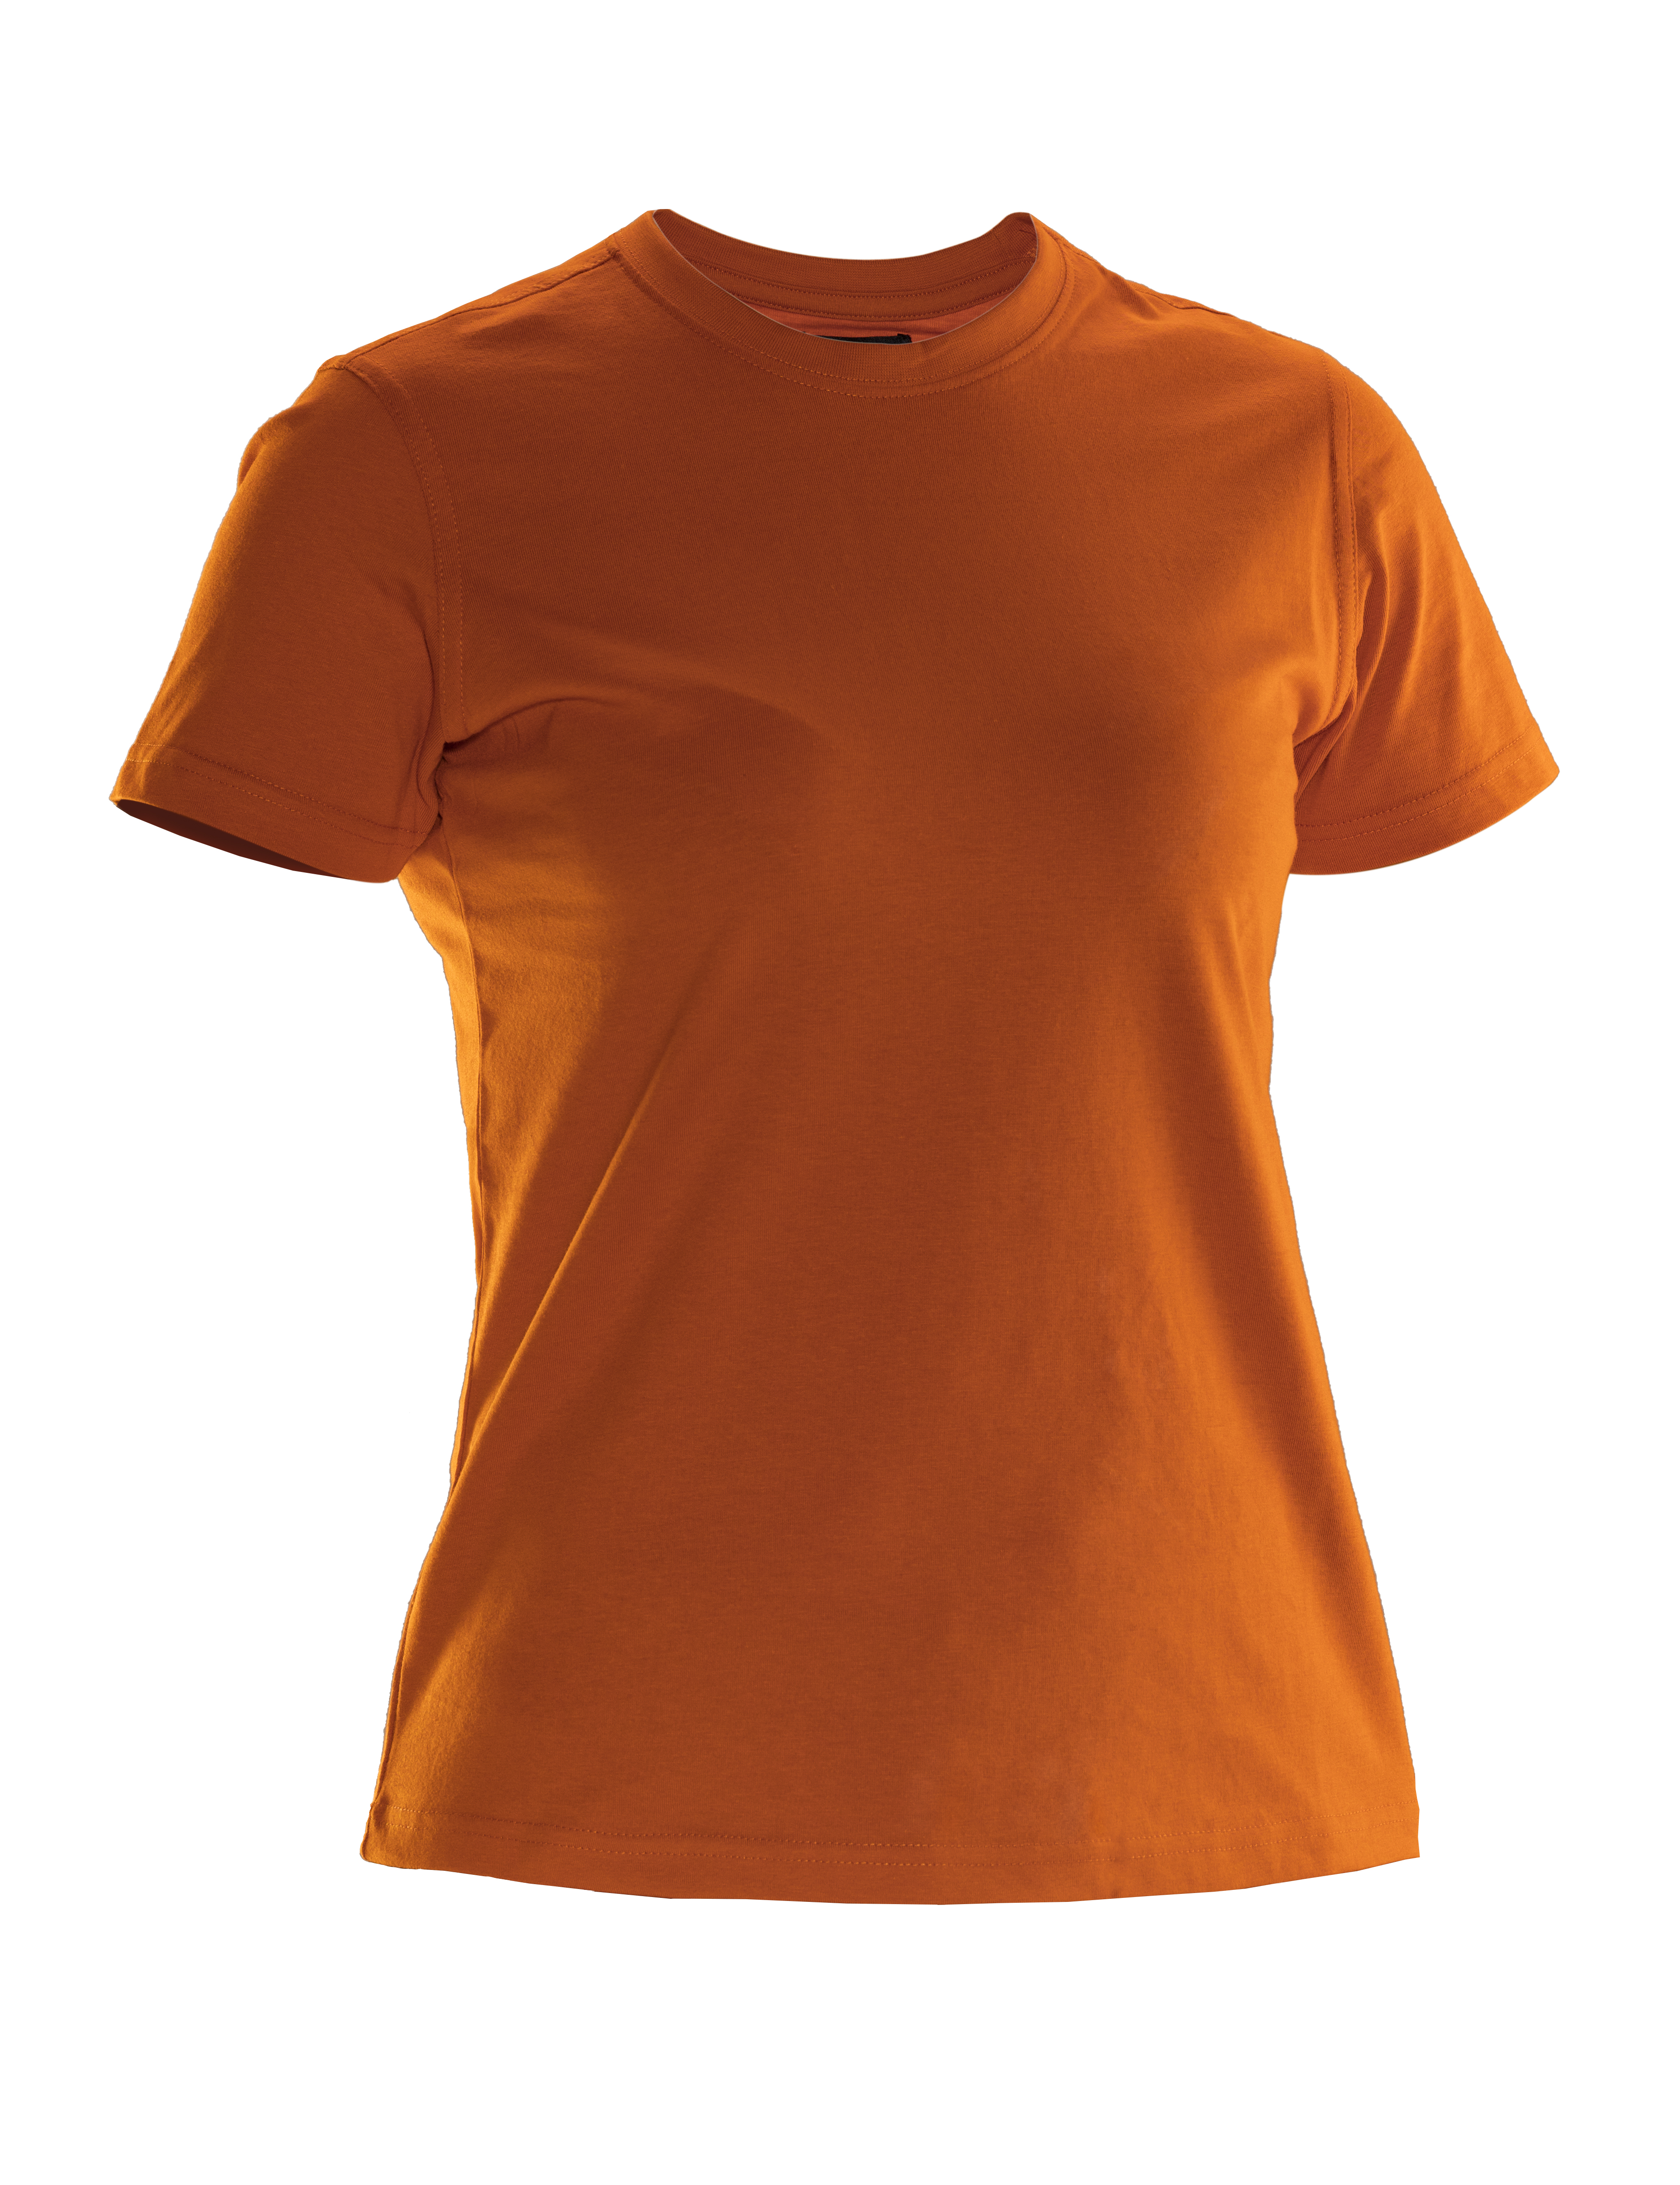 5265 T-SHIRT FEMME XL orange